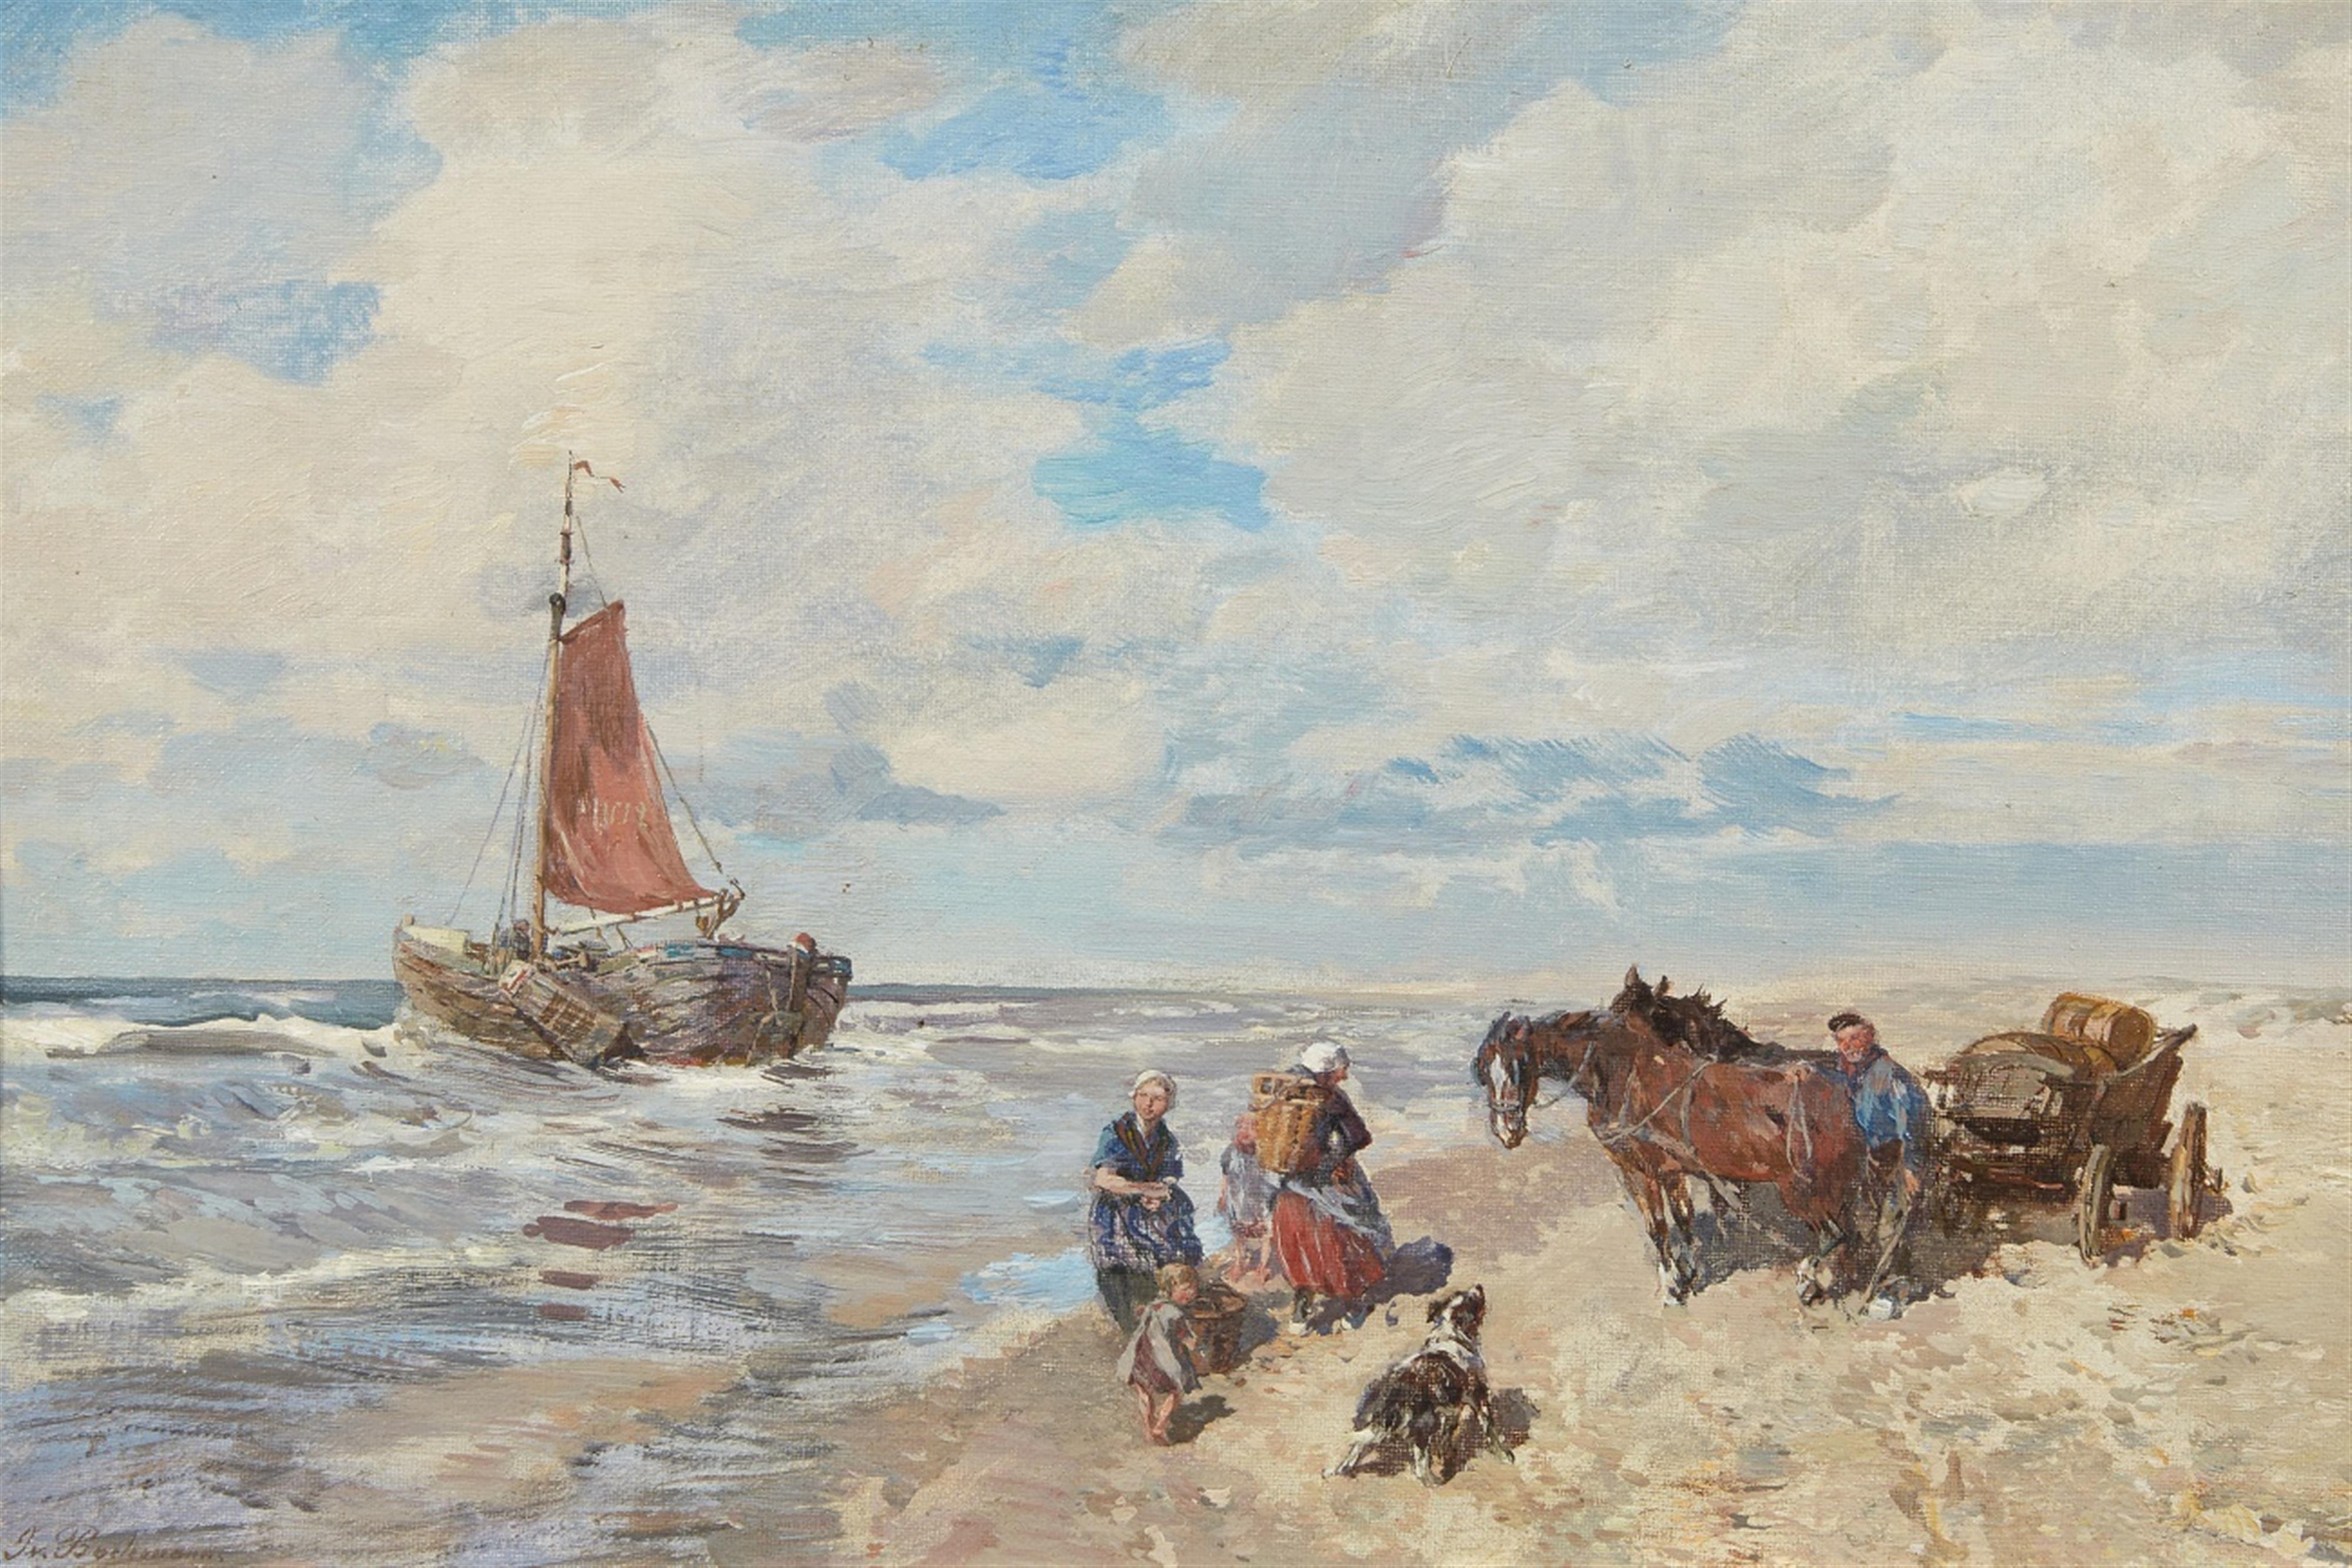 Gregor von Bochmann - Coastal Landscape with a Cart and Sailing Boat - image-1